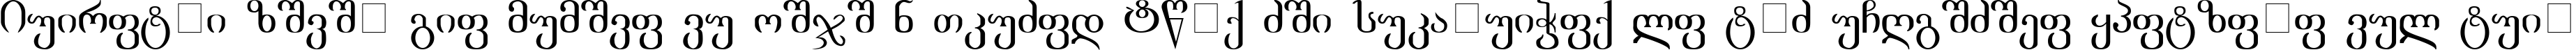 Пример написания шрифтом acad текста на испанском